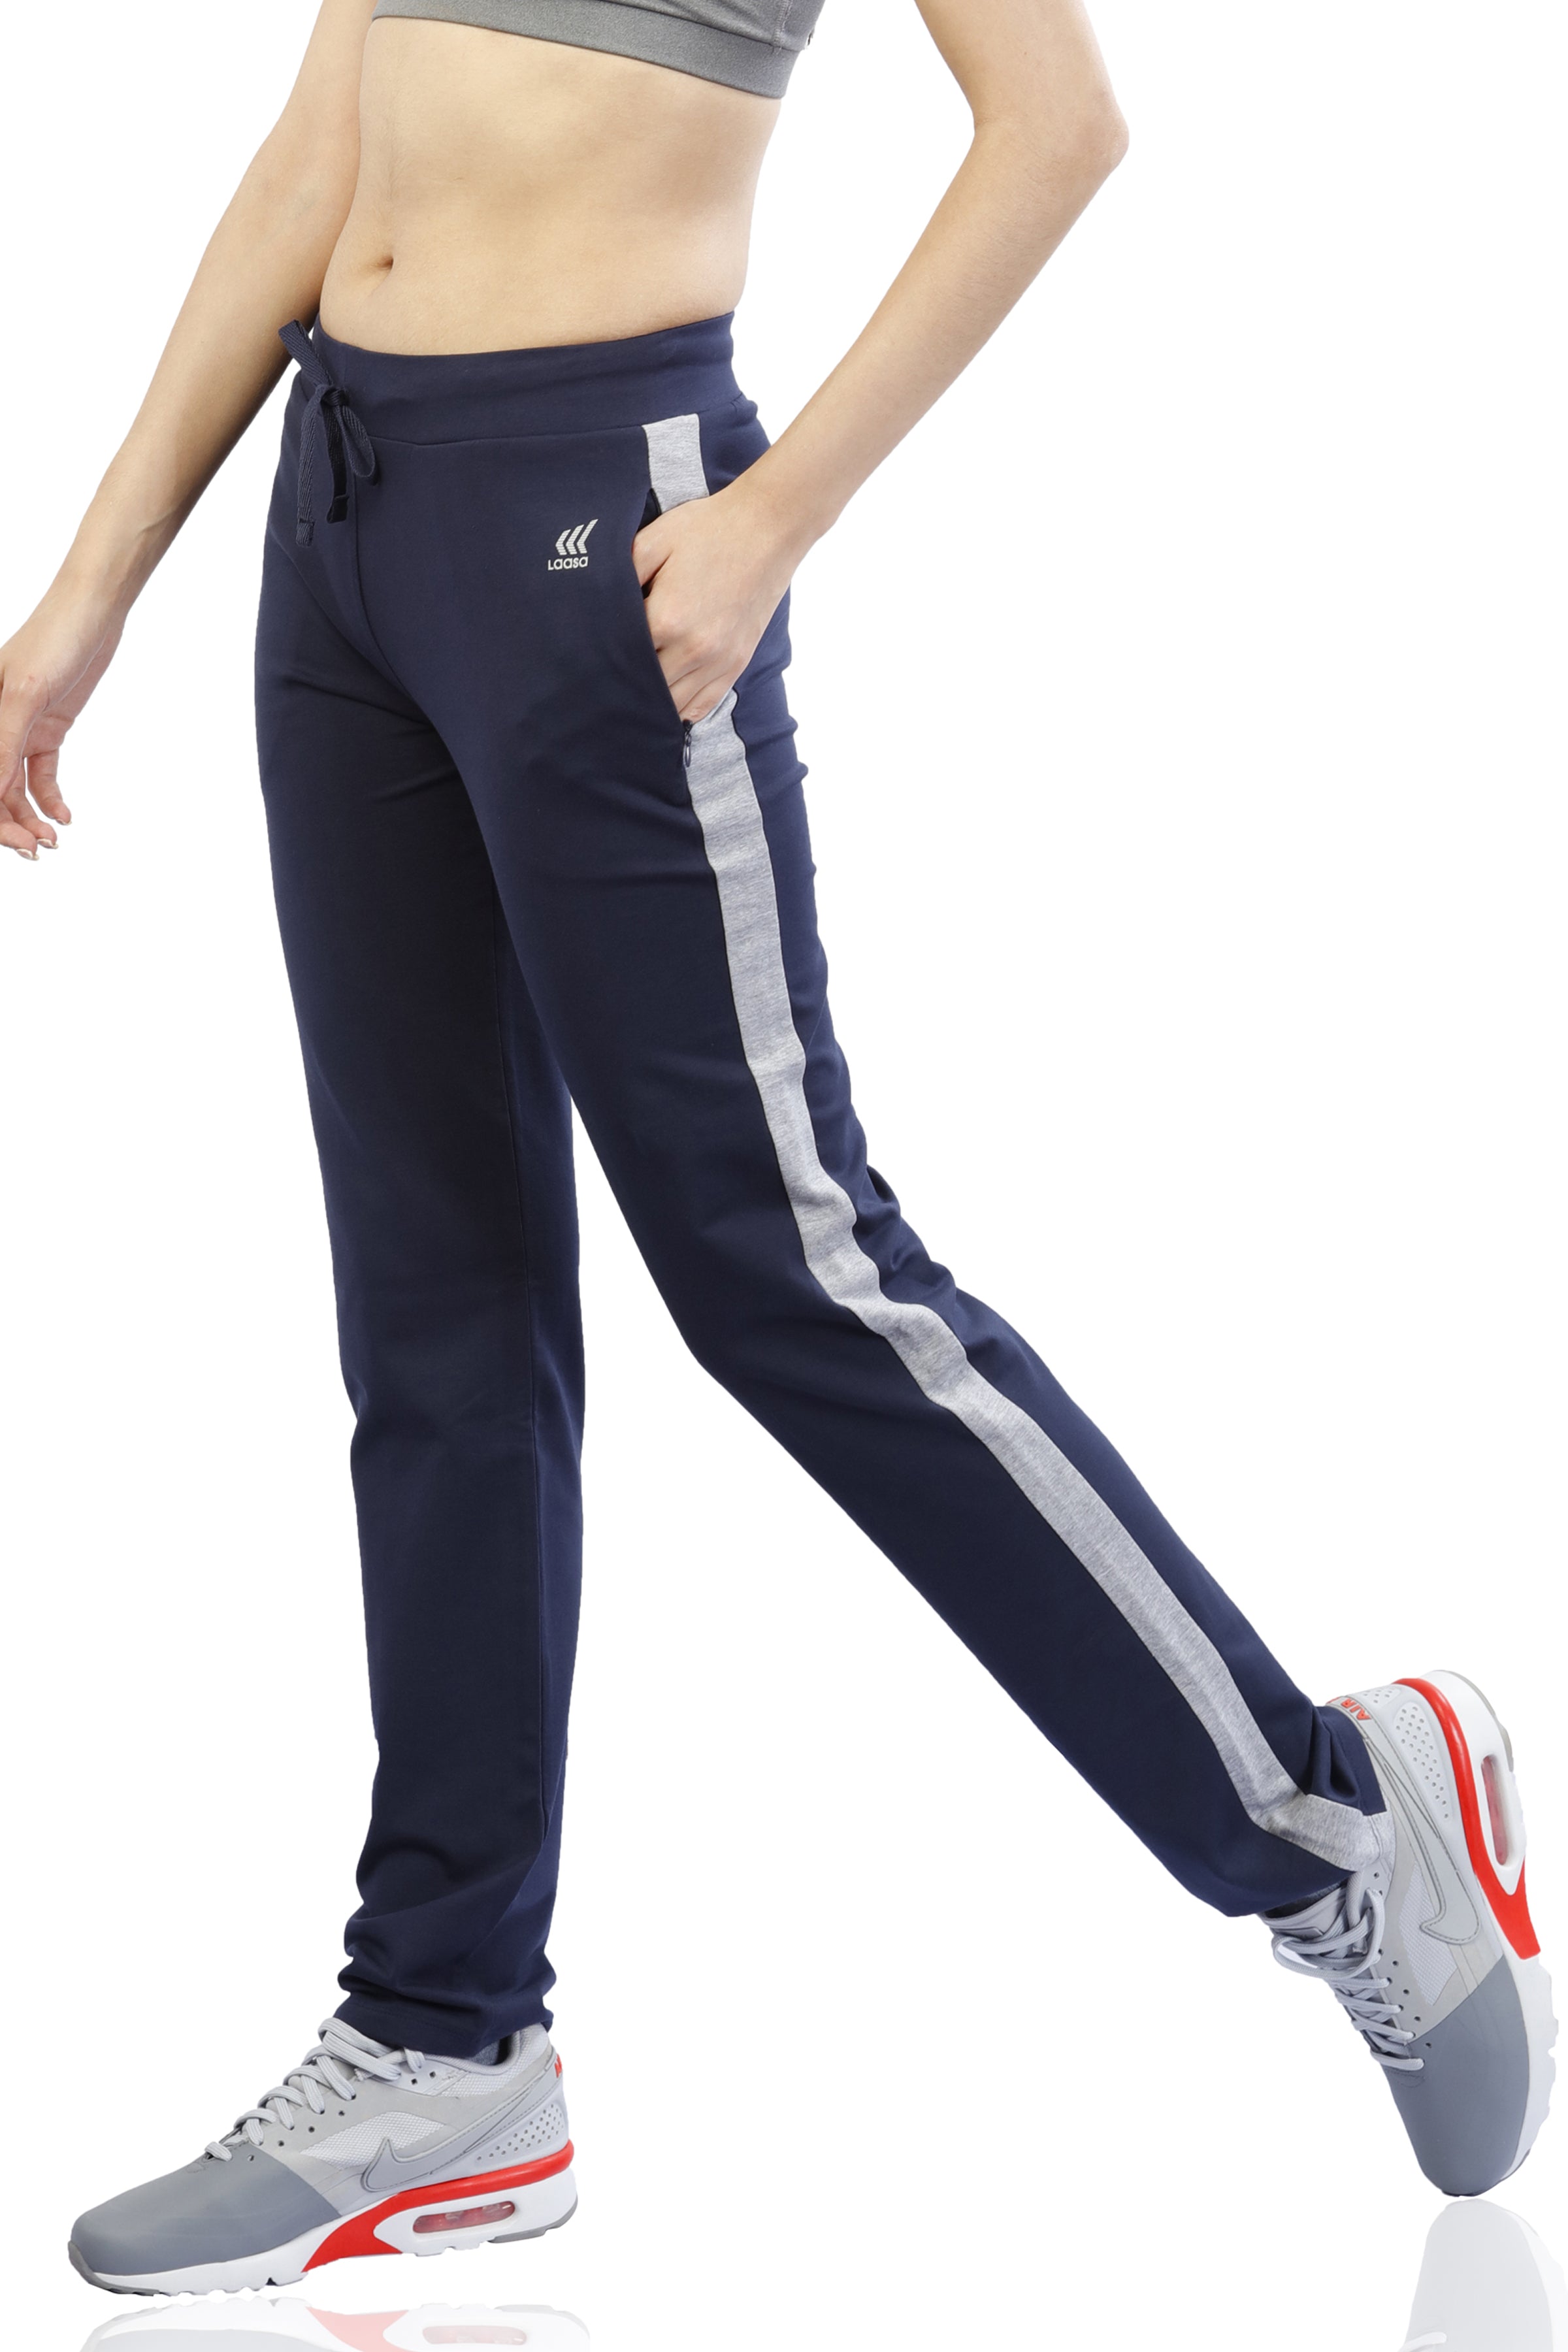 Juicy Couture OG Big Bling Velour Womens Track Pants Regal Blue  110010762X1703 – Shoe Palace